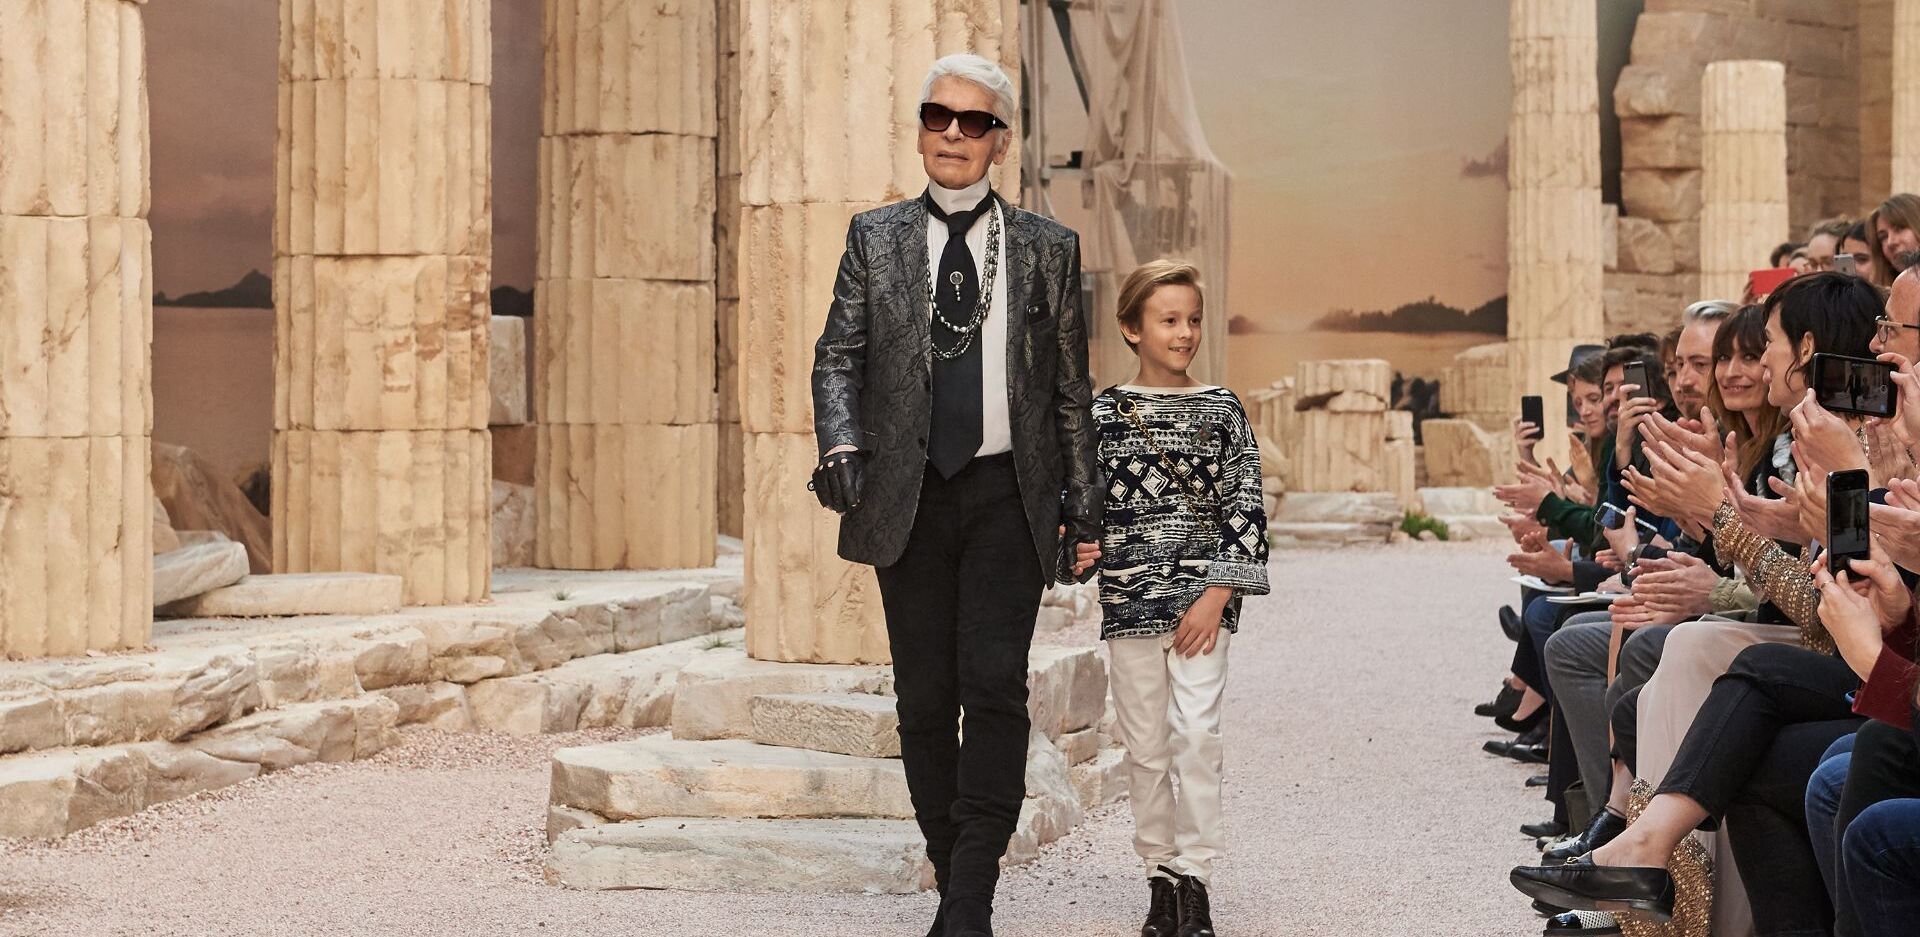 Karl Lagerfeld & οι μούσες του: σχέσεις έμπενευσης, αγάπης και δημιουργίας